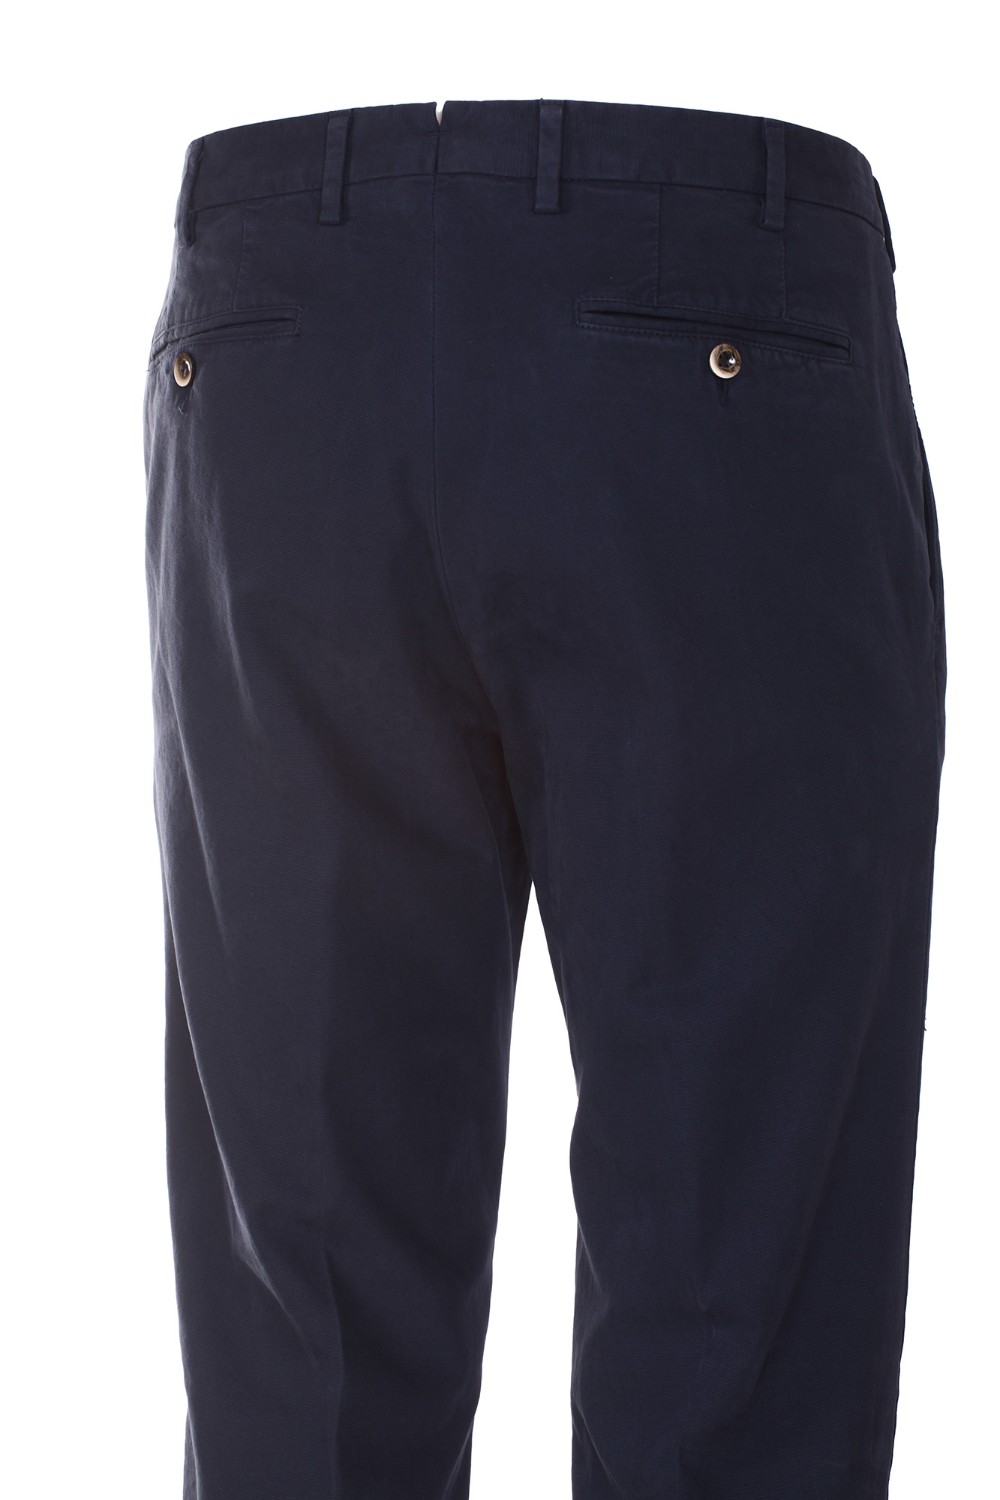 shop GERMANO Sales Pantalone: Germano pantalone in cotone.
Drop 6.
Chiusura con zip e bottone sovrapposto.
Regular fit.
Composizione: 97% cotone 3% elastan.
Made in Italy.. 524 59J2-402 number 36766